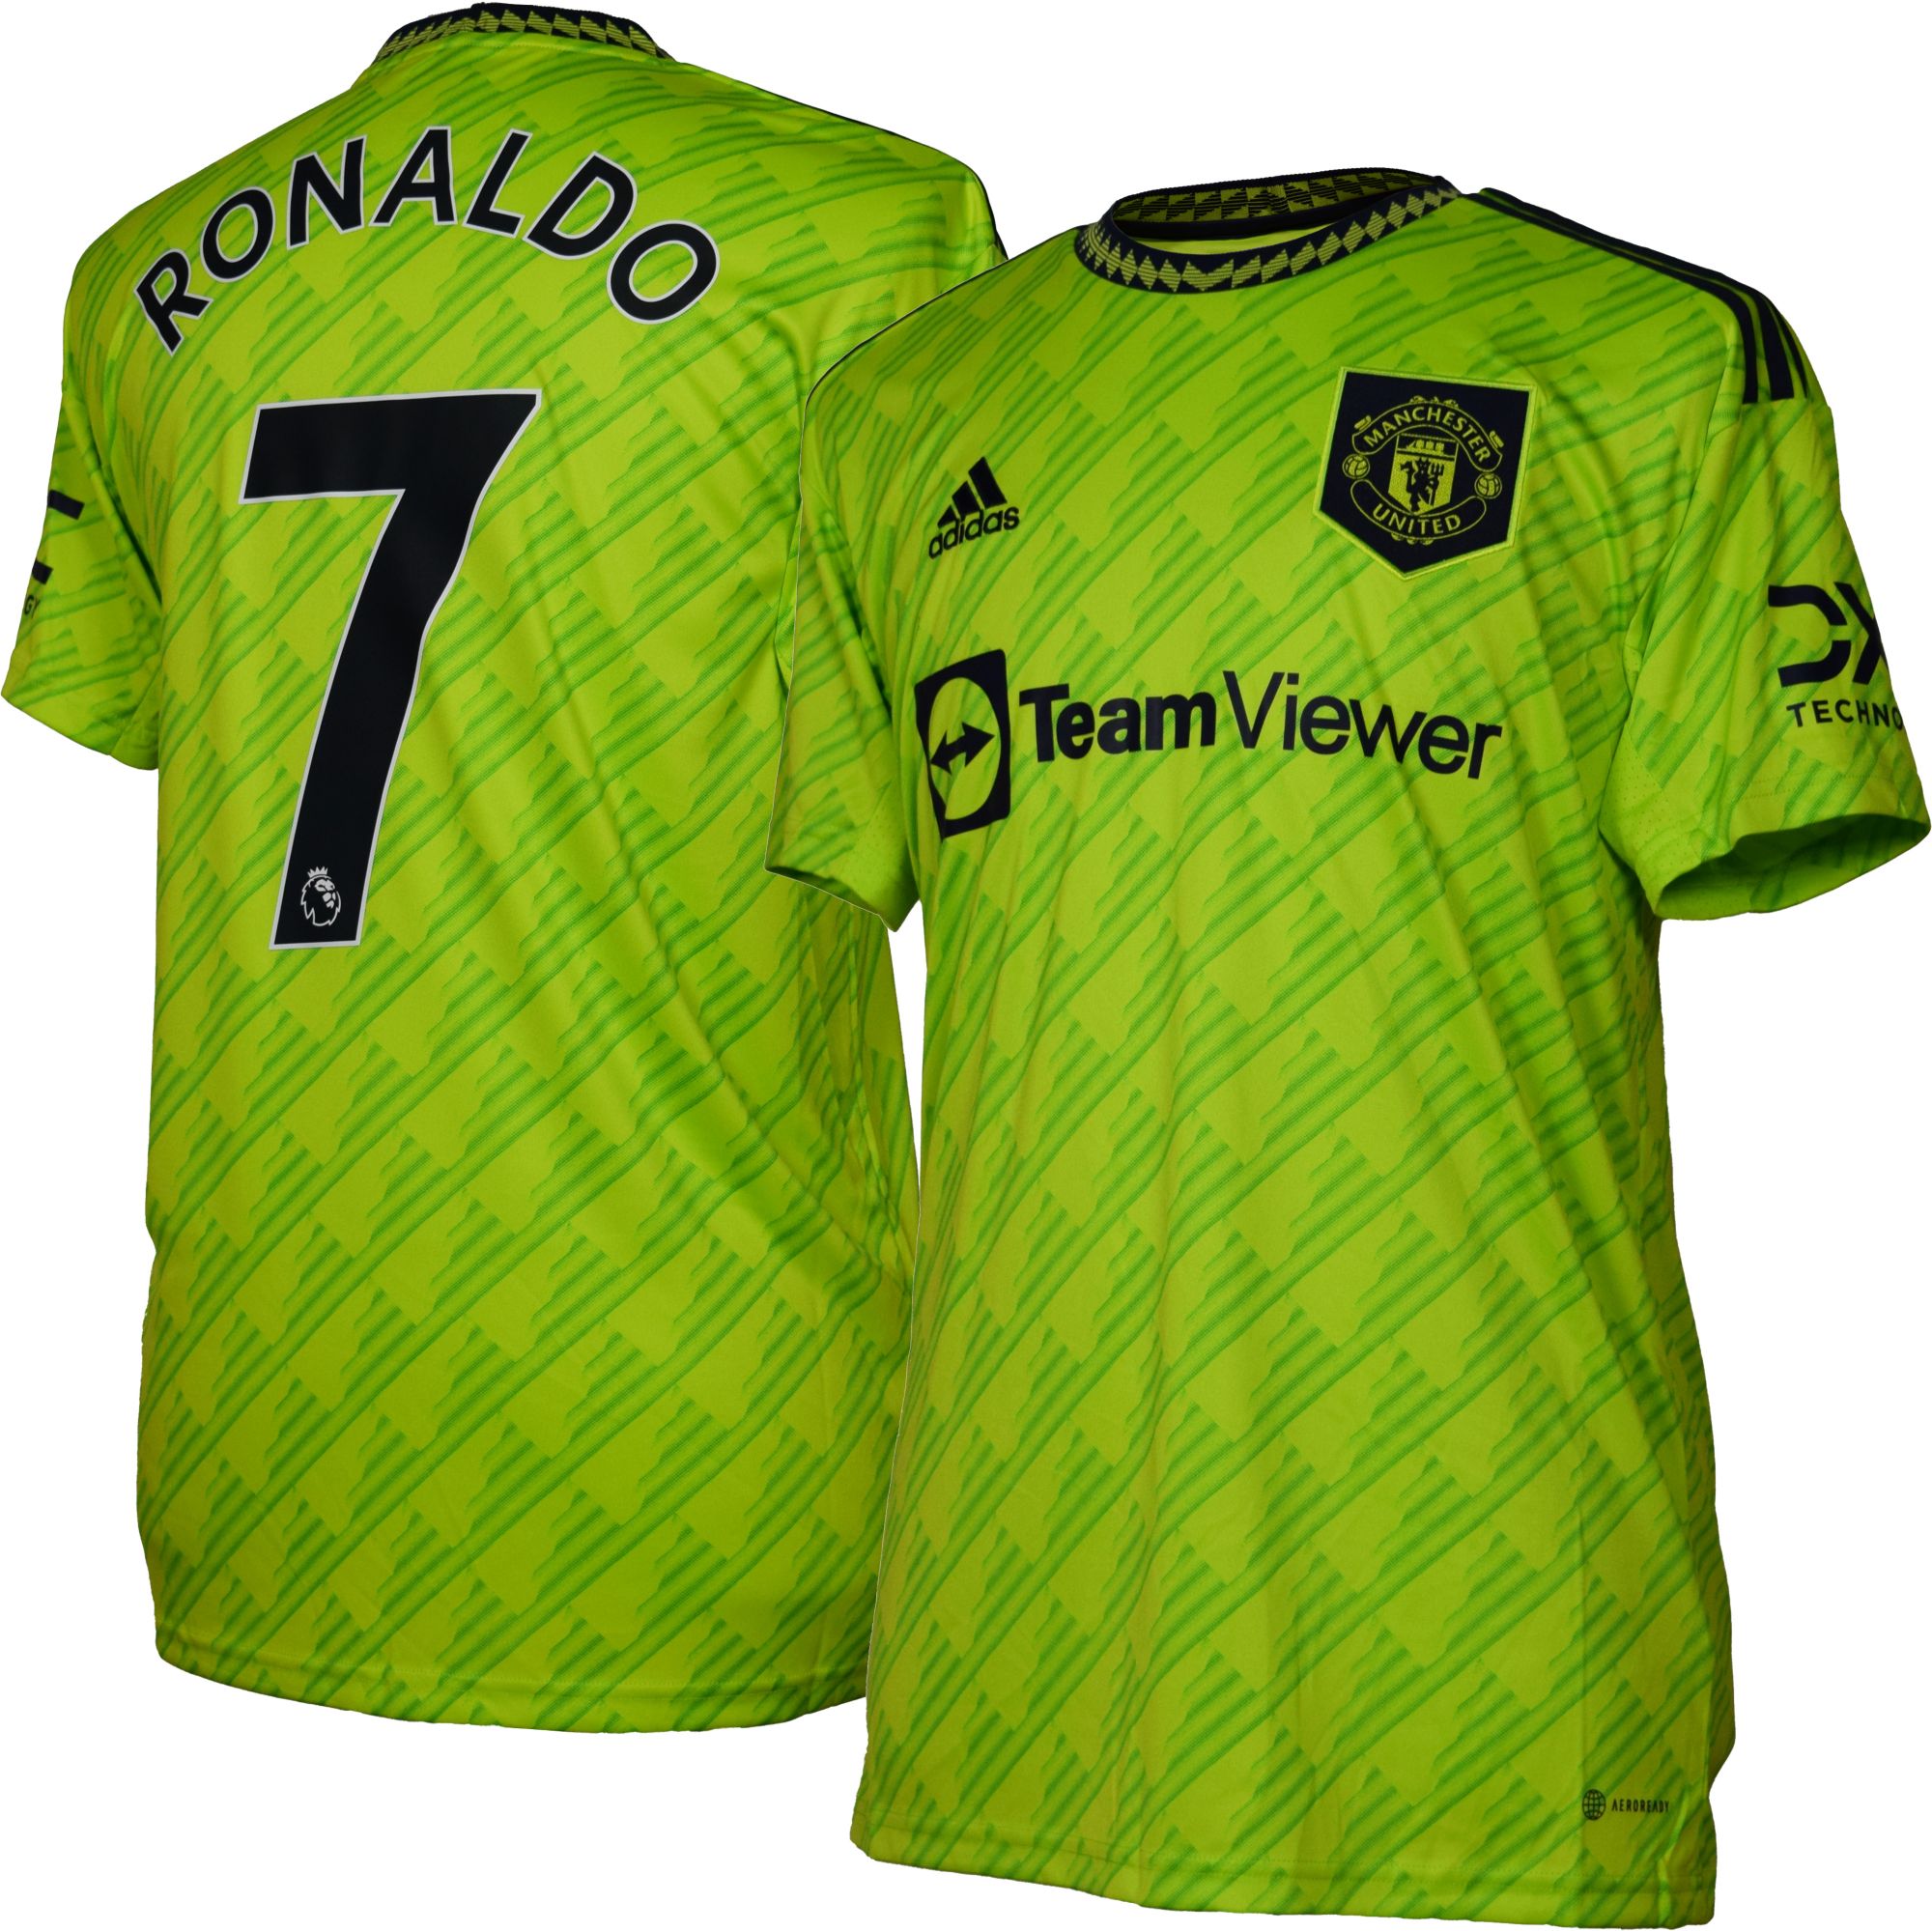 ronaldo football dress